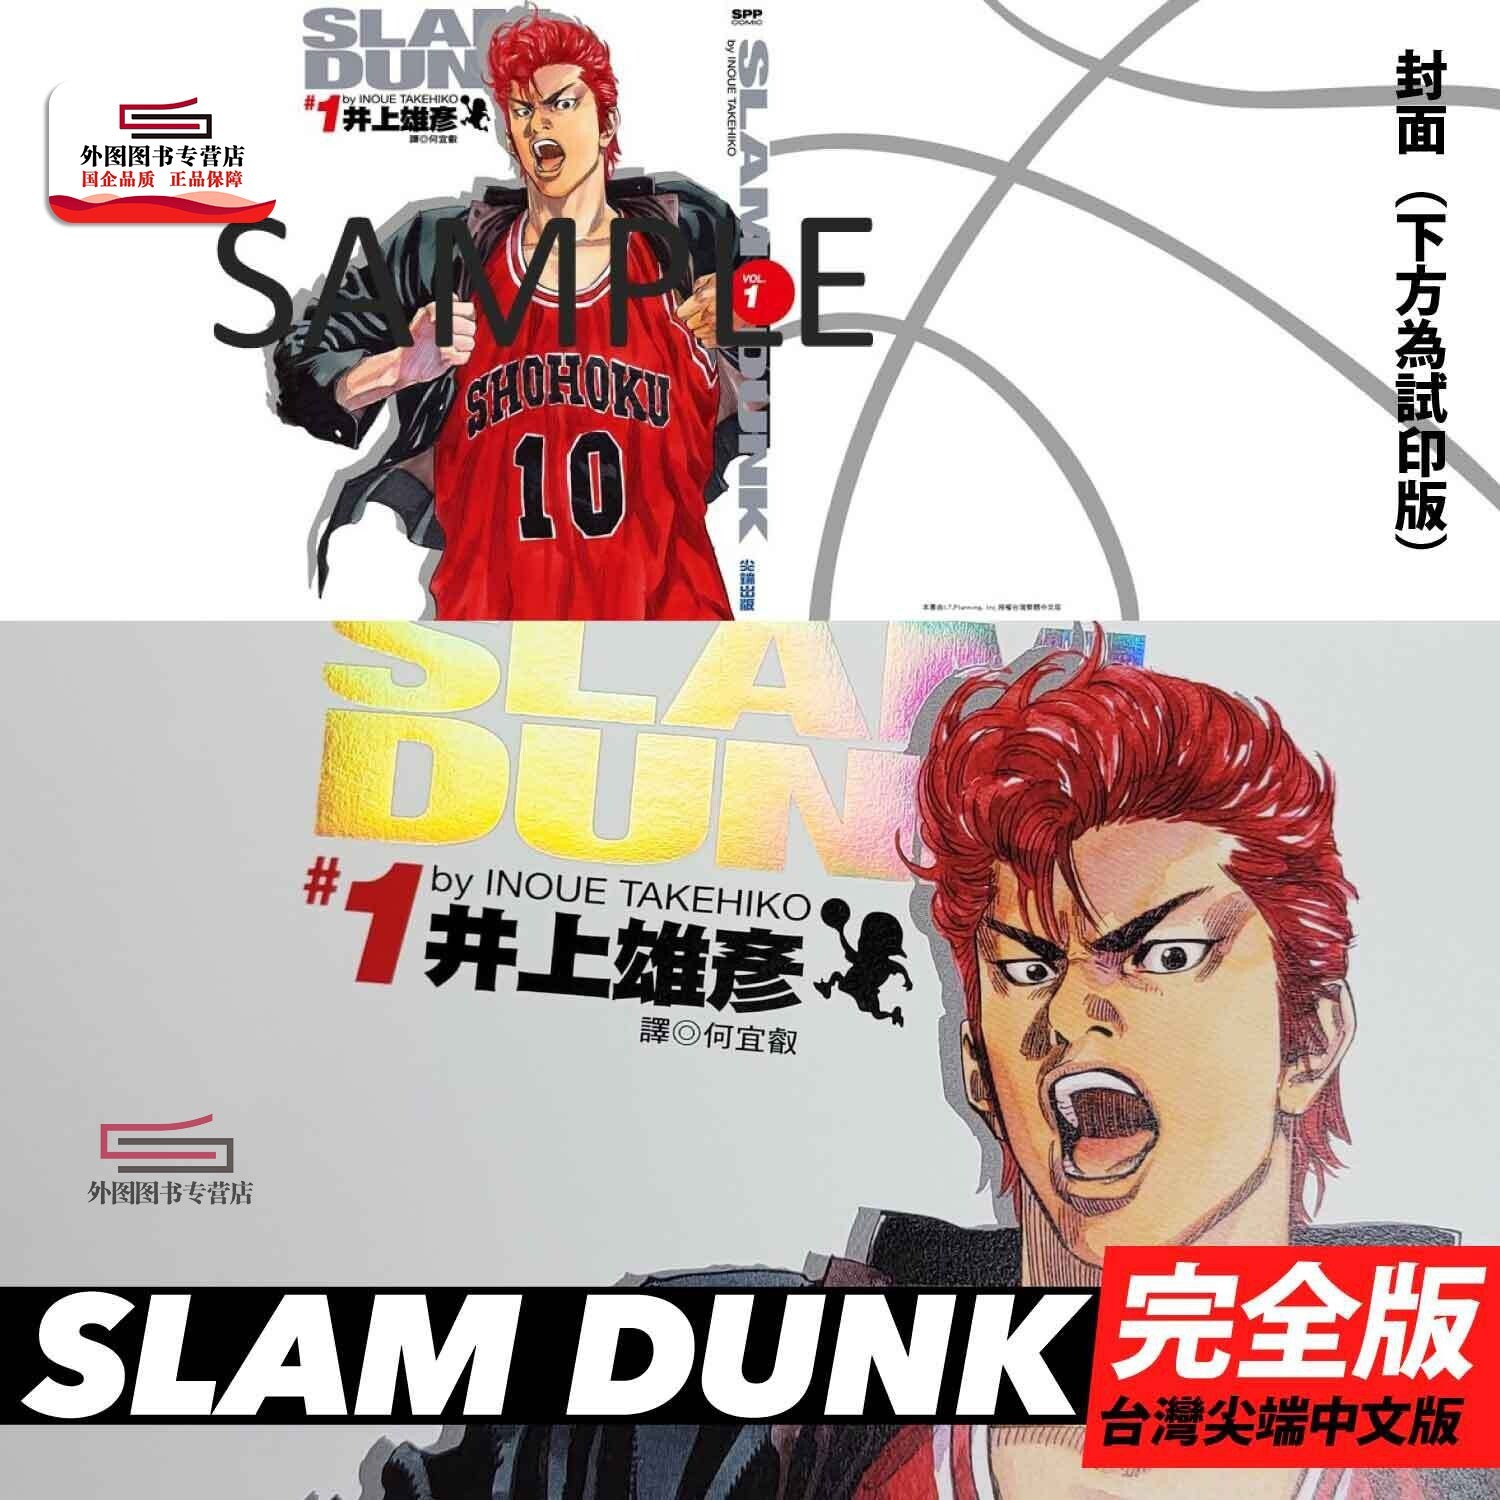 Slam dunk 完全版-